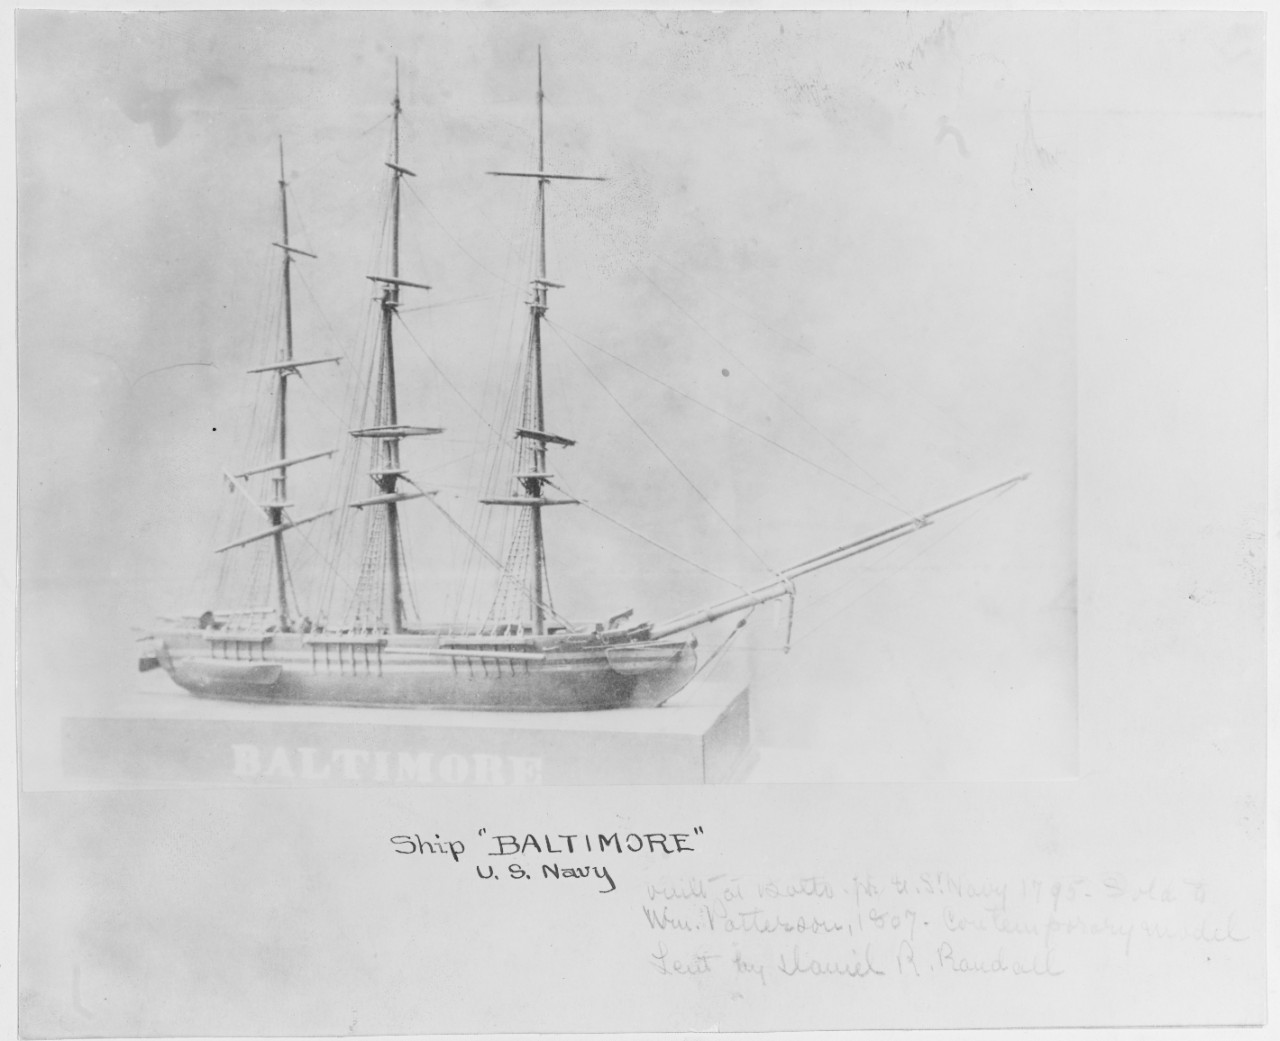 USS BALTIMORE